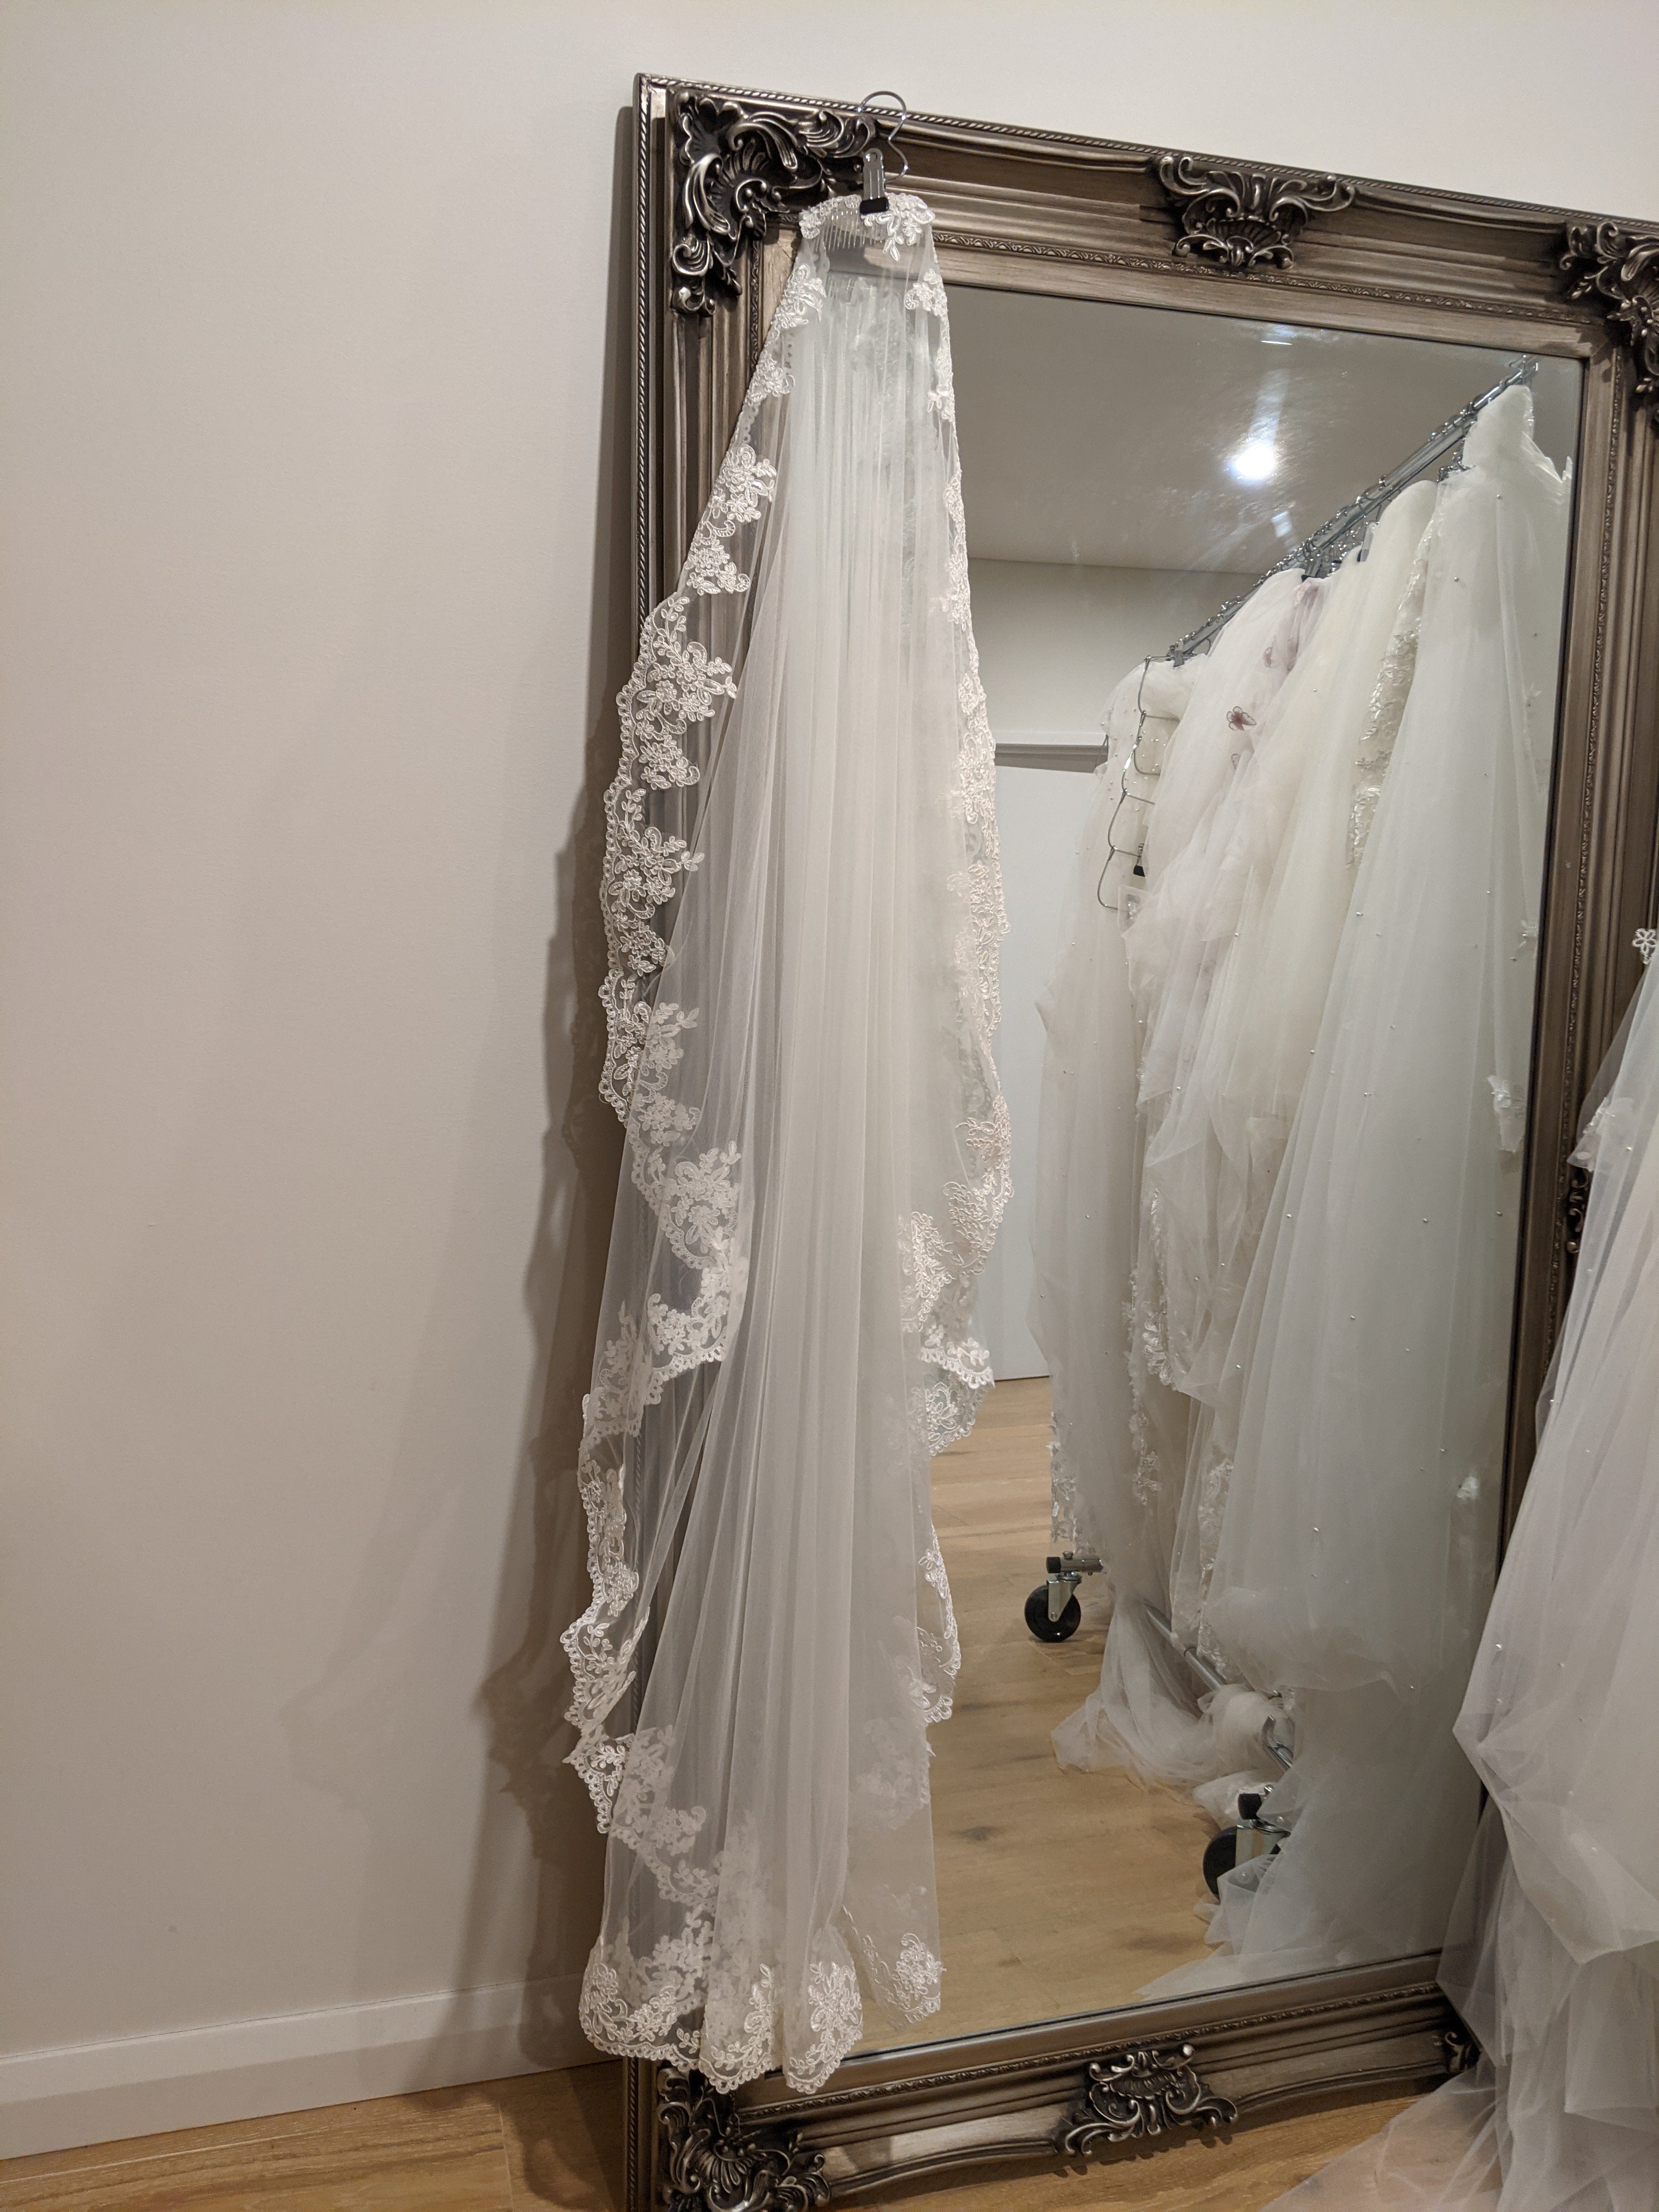 Aularso 2 Tier Lace Wedding Veils for Brides Short Fingertip